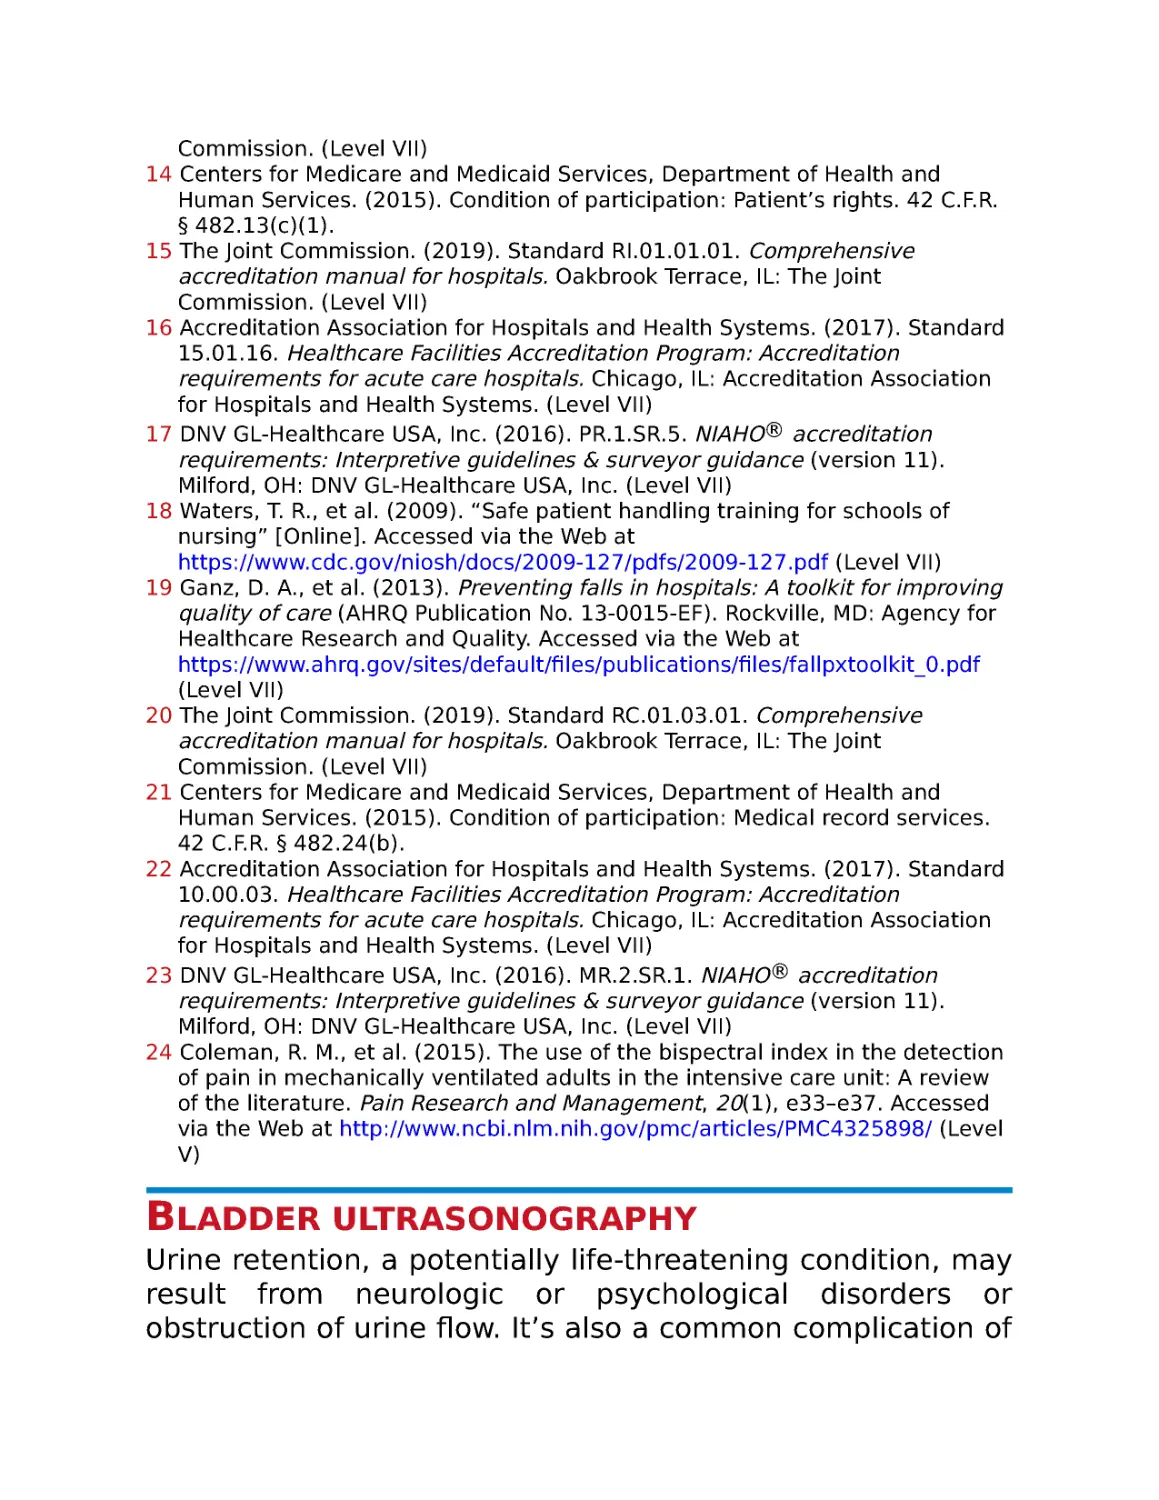 Bladder ultrasonography